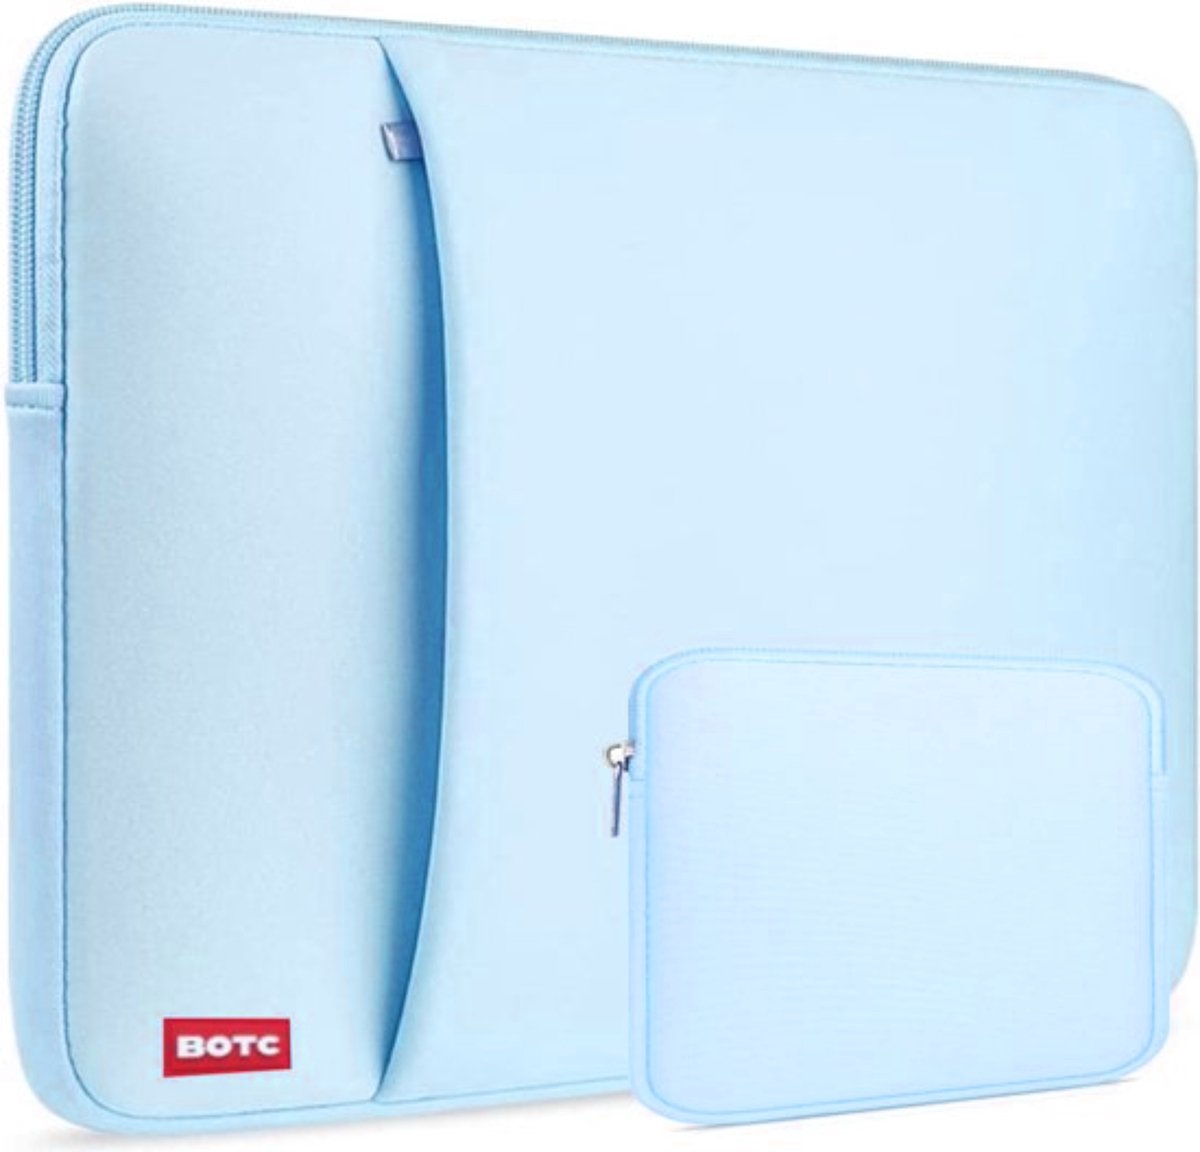 BOTC Laptophoes 15.6 inch - 2-delige - Laptop Sleeve met Etui - Laptophoes/ Sleeve - Extra Vak - Blauw